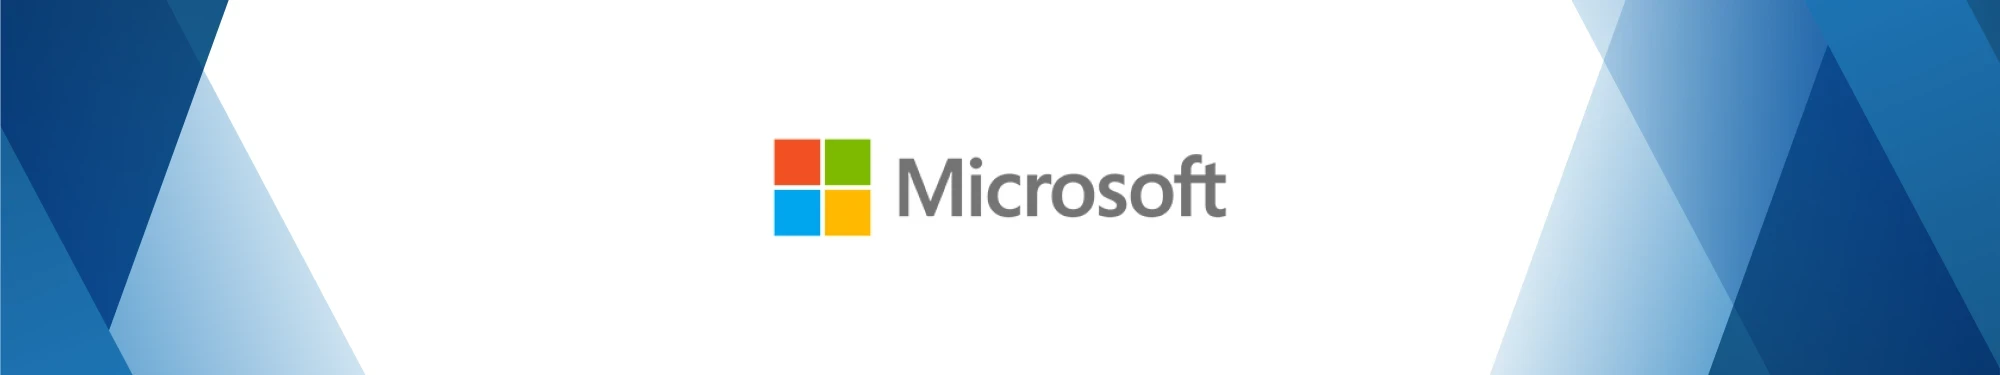 Partnerheader Microsoft | SPIRIT/21